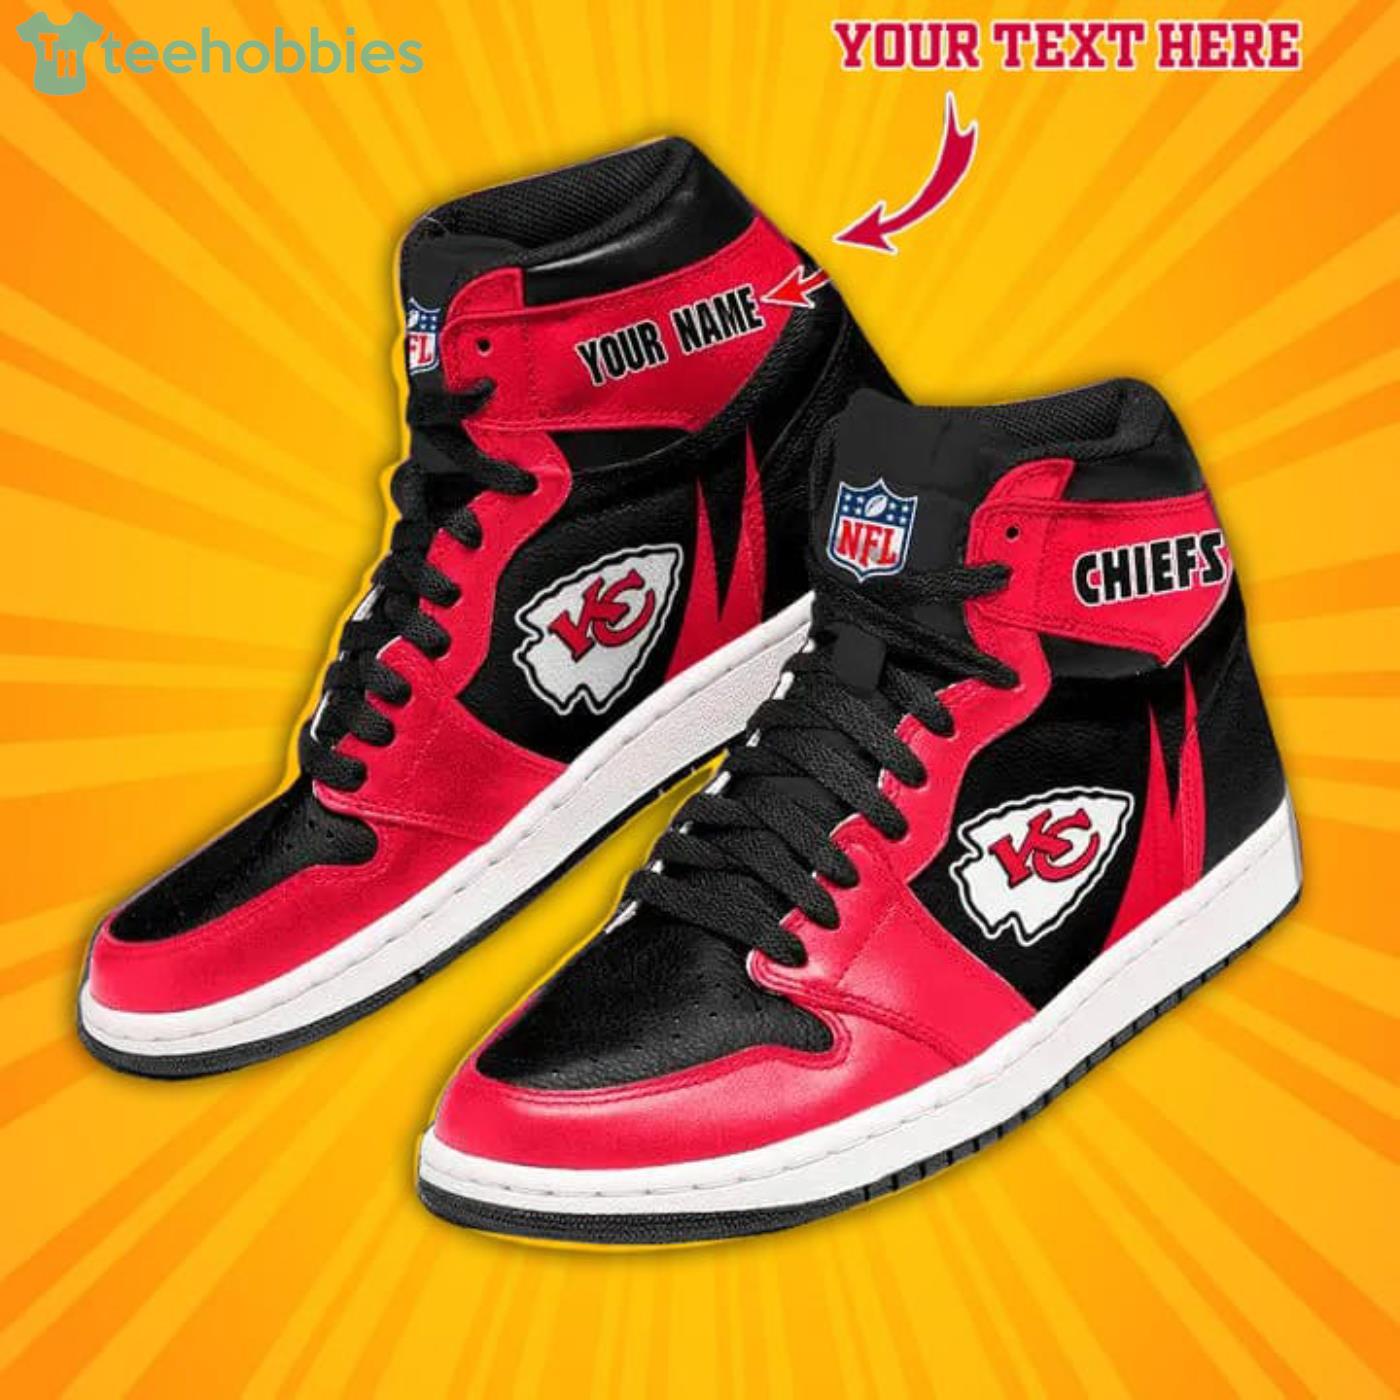 Kansas City Chiefs NFL Custom Name Air Jordan 11 Sneakers Shoes For Fans